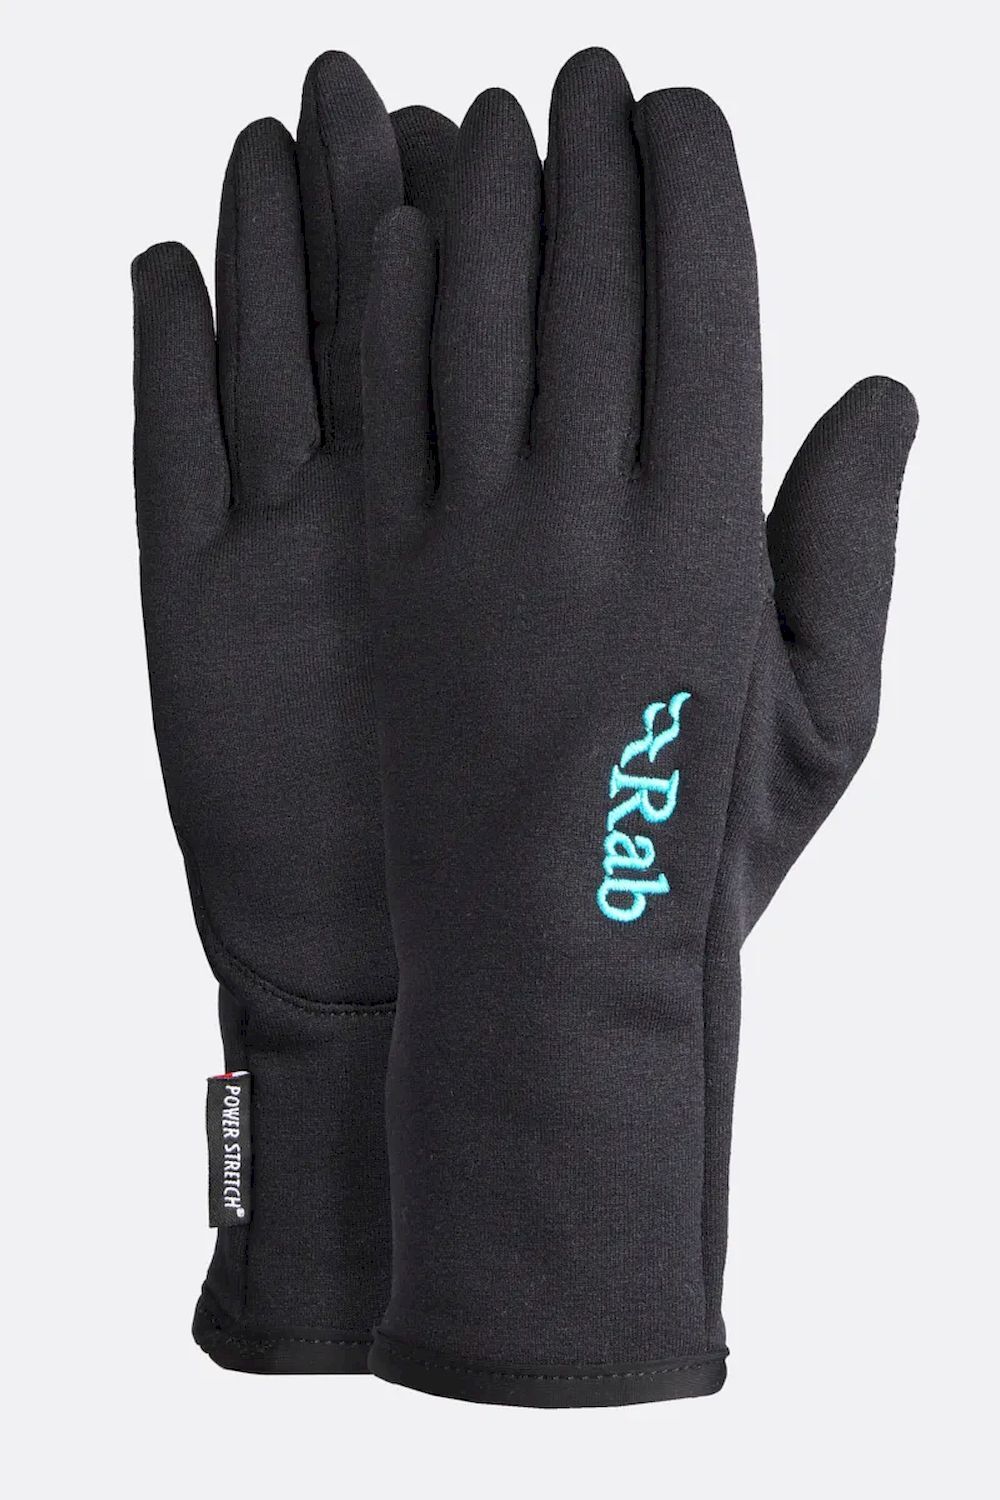 Rab Power Stretch Pro Glove  - Hiking gloves - Women's